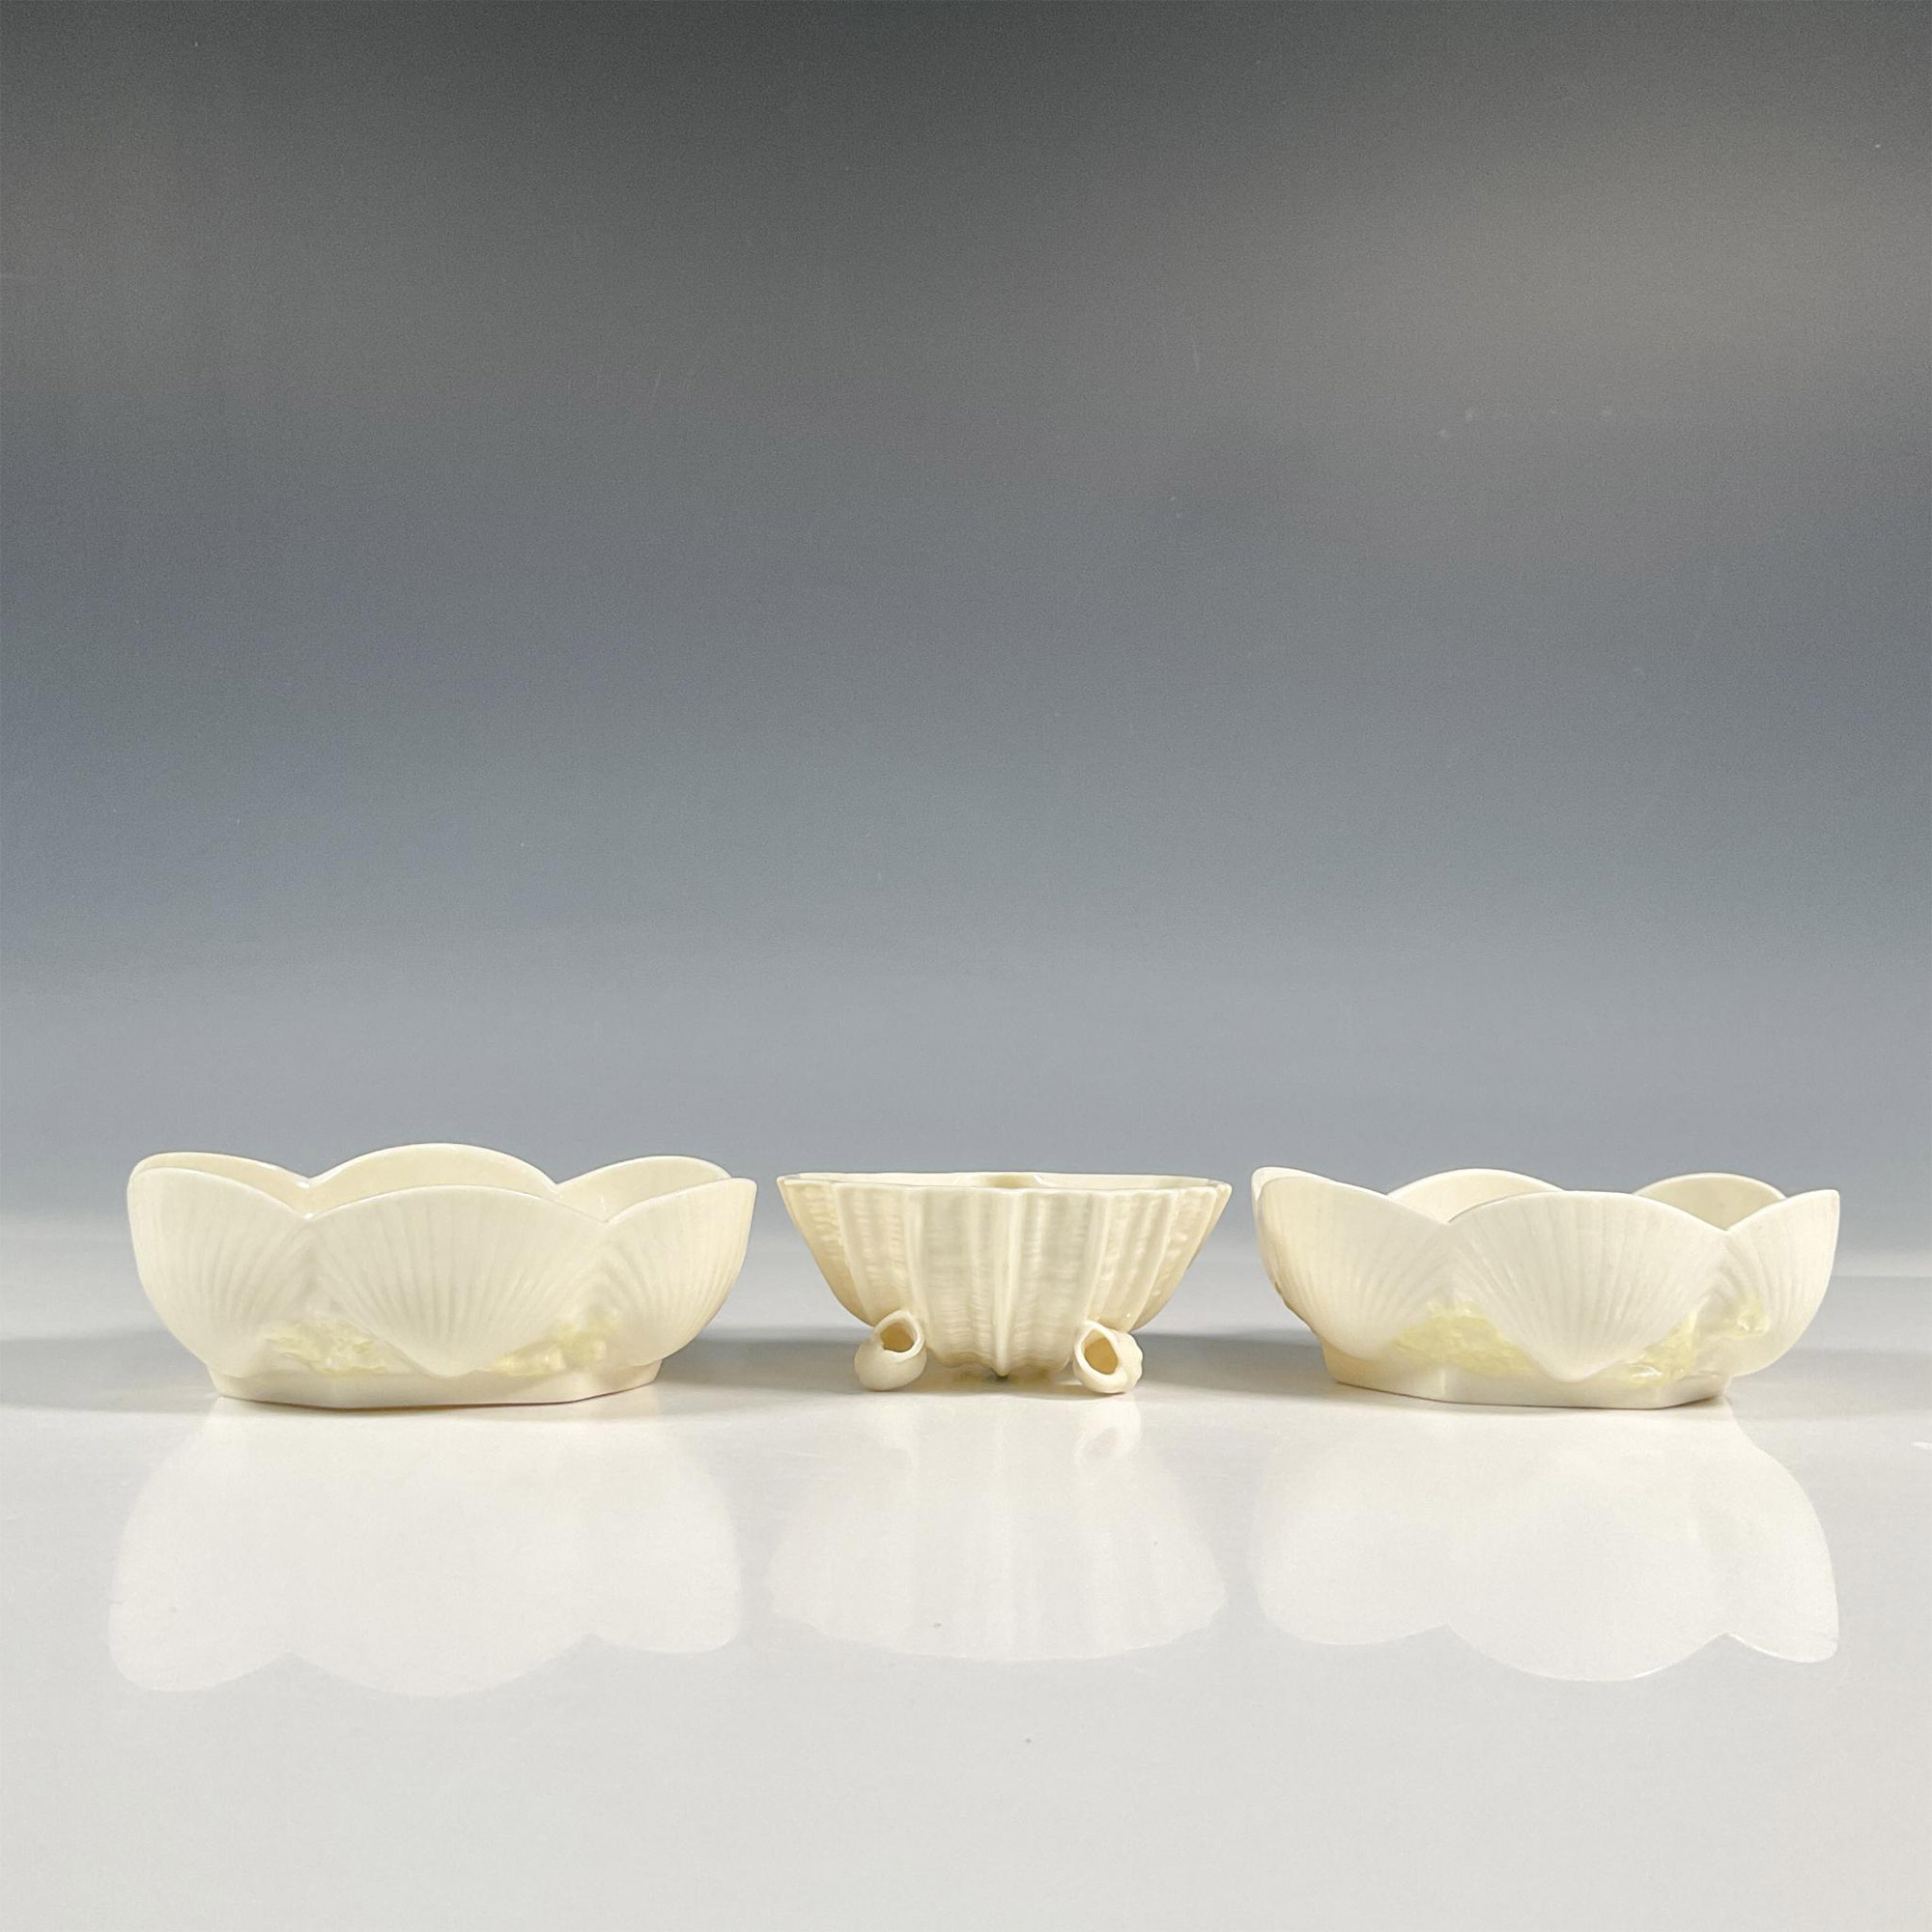 3pc Belleek Porcelain Shell Bon Bon Dishes - Image 2 of 3